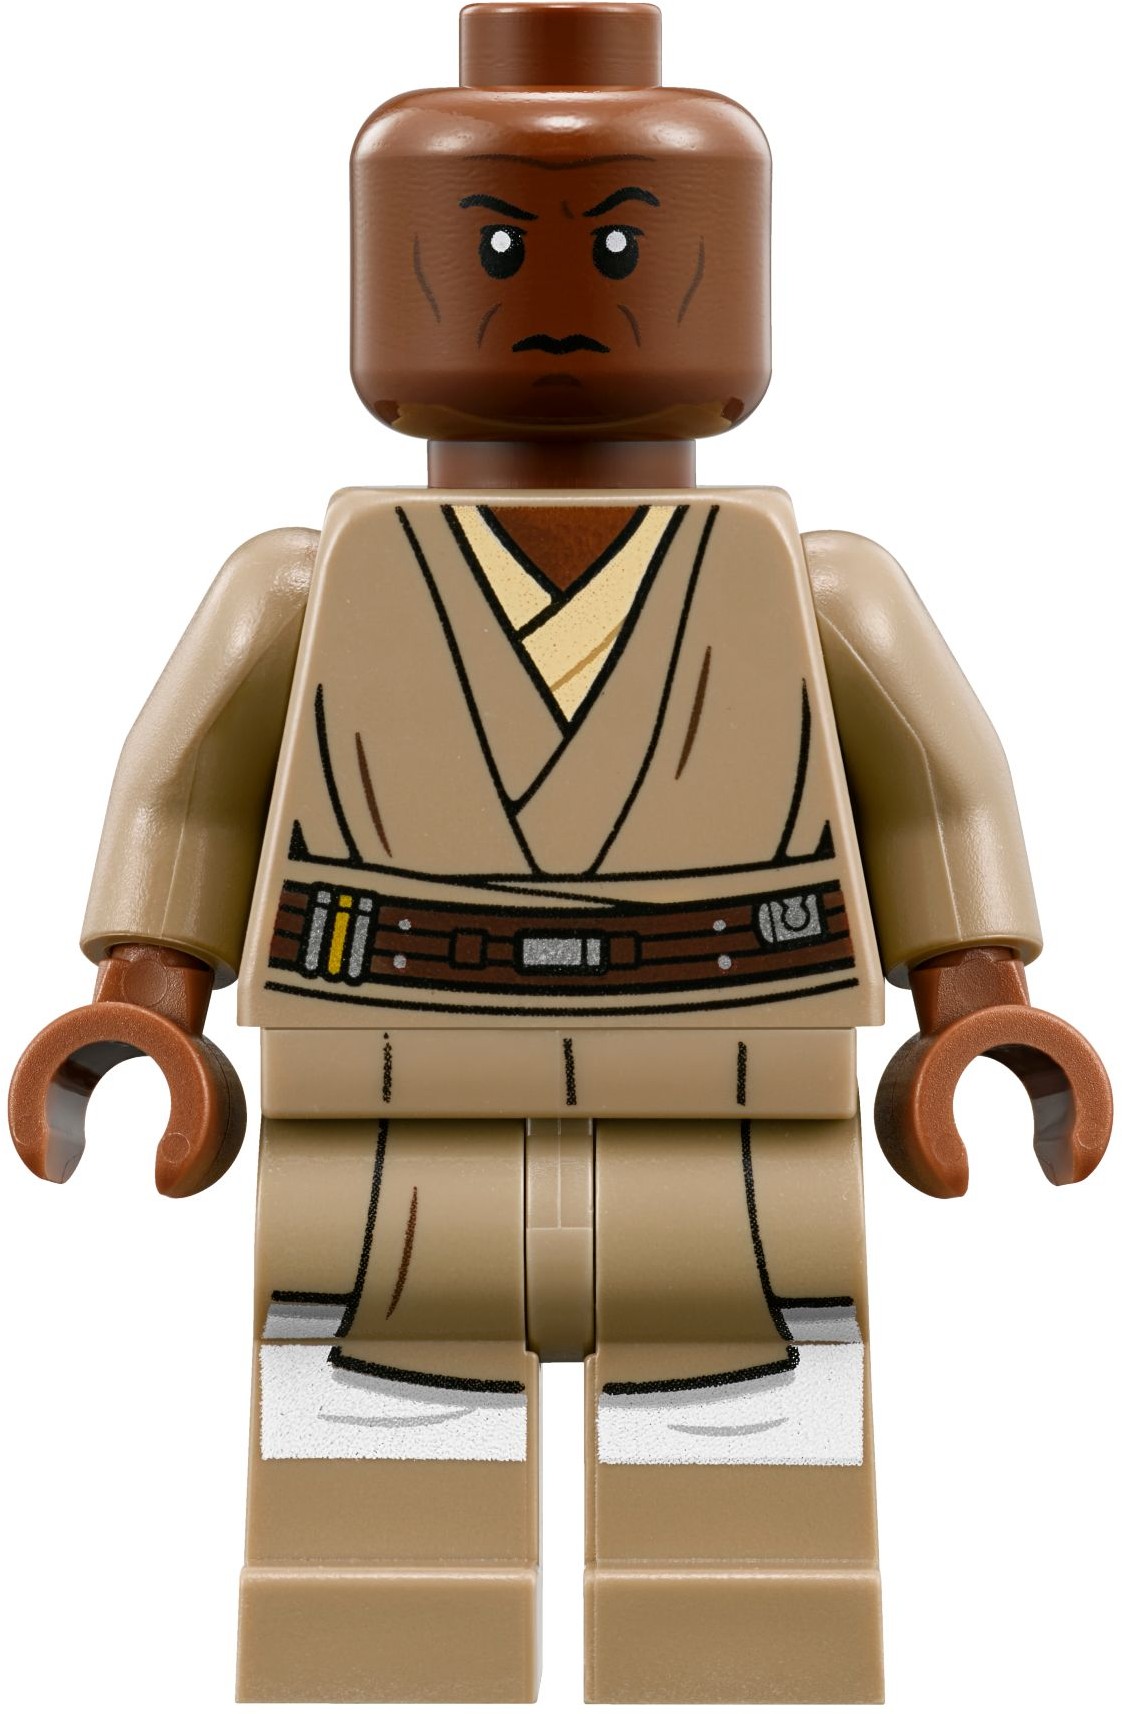 Lego Star Wars Mace Windu Minifigure from set 75199 Free P&P UK Stock 